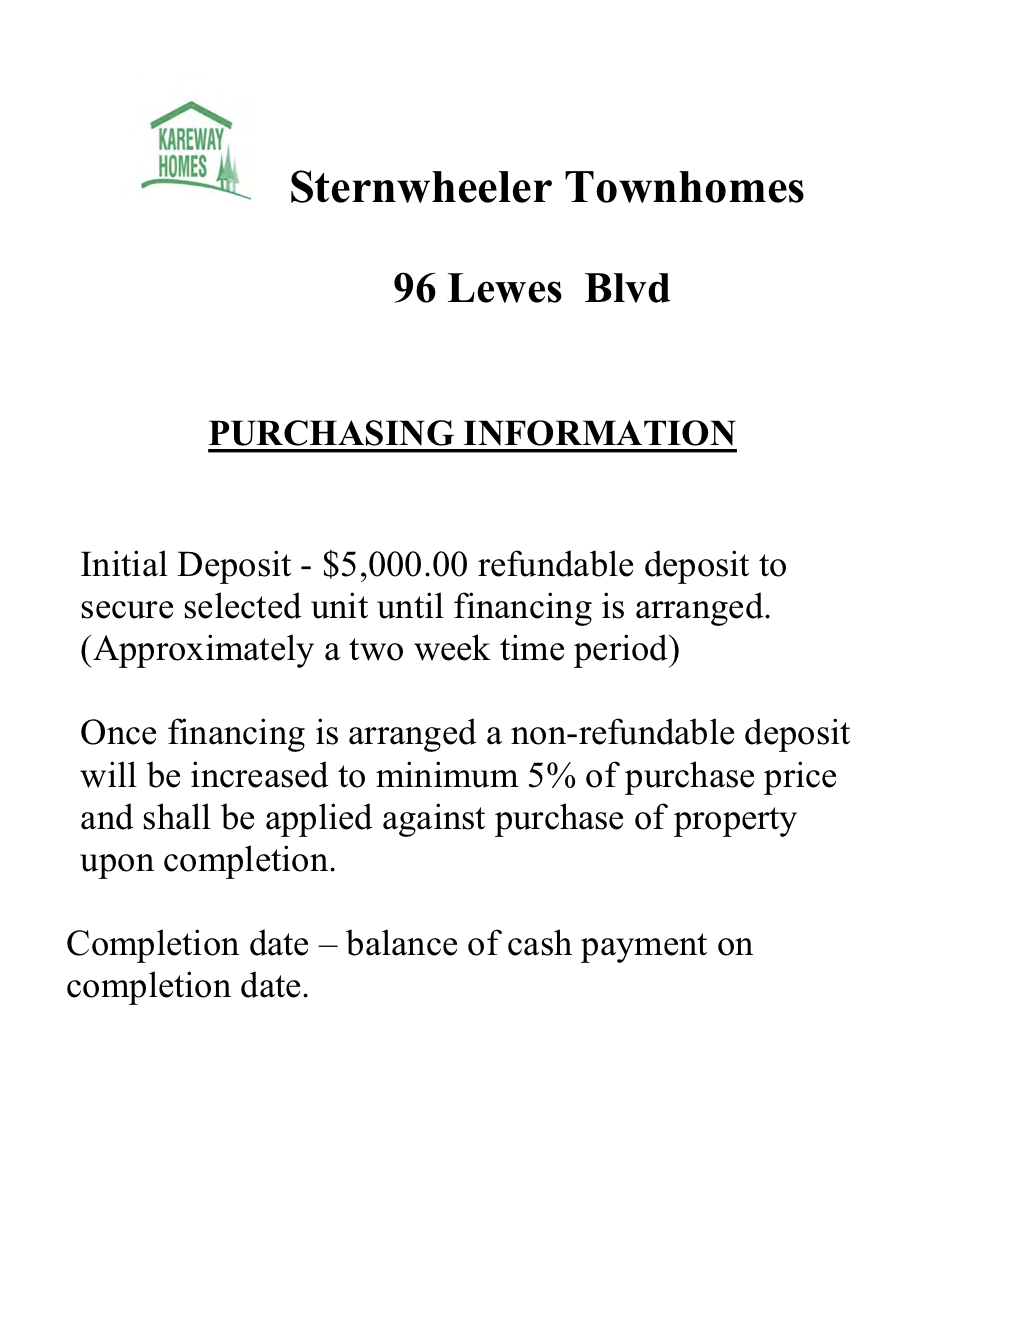 sternwheeler townhomes purchasing info